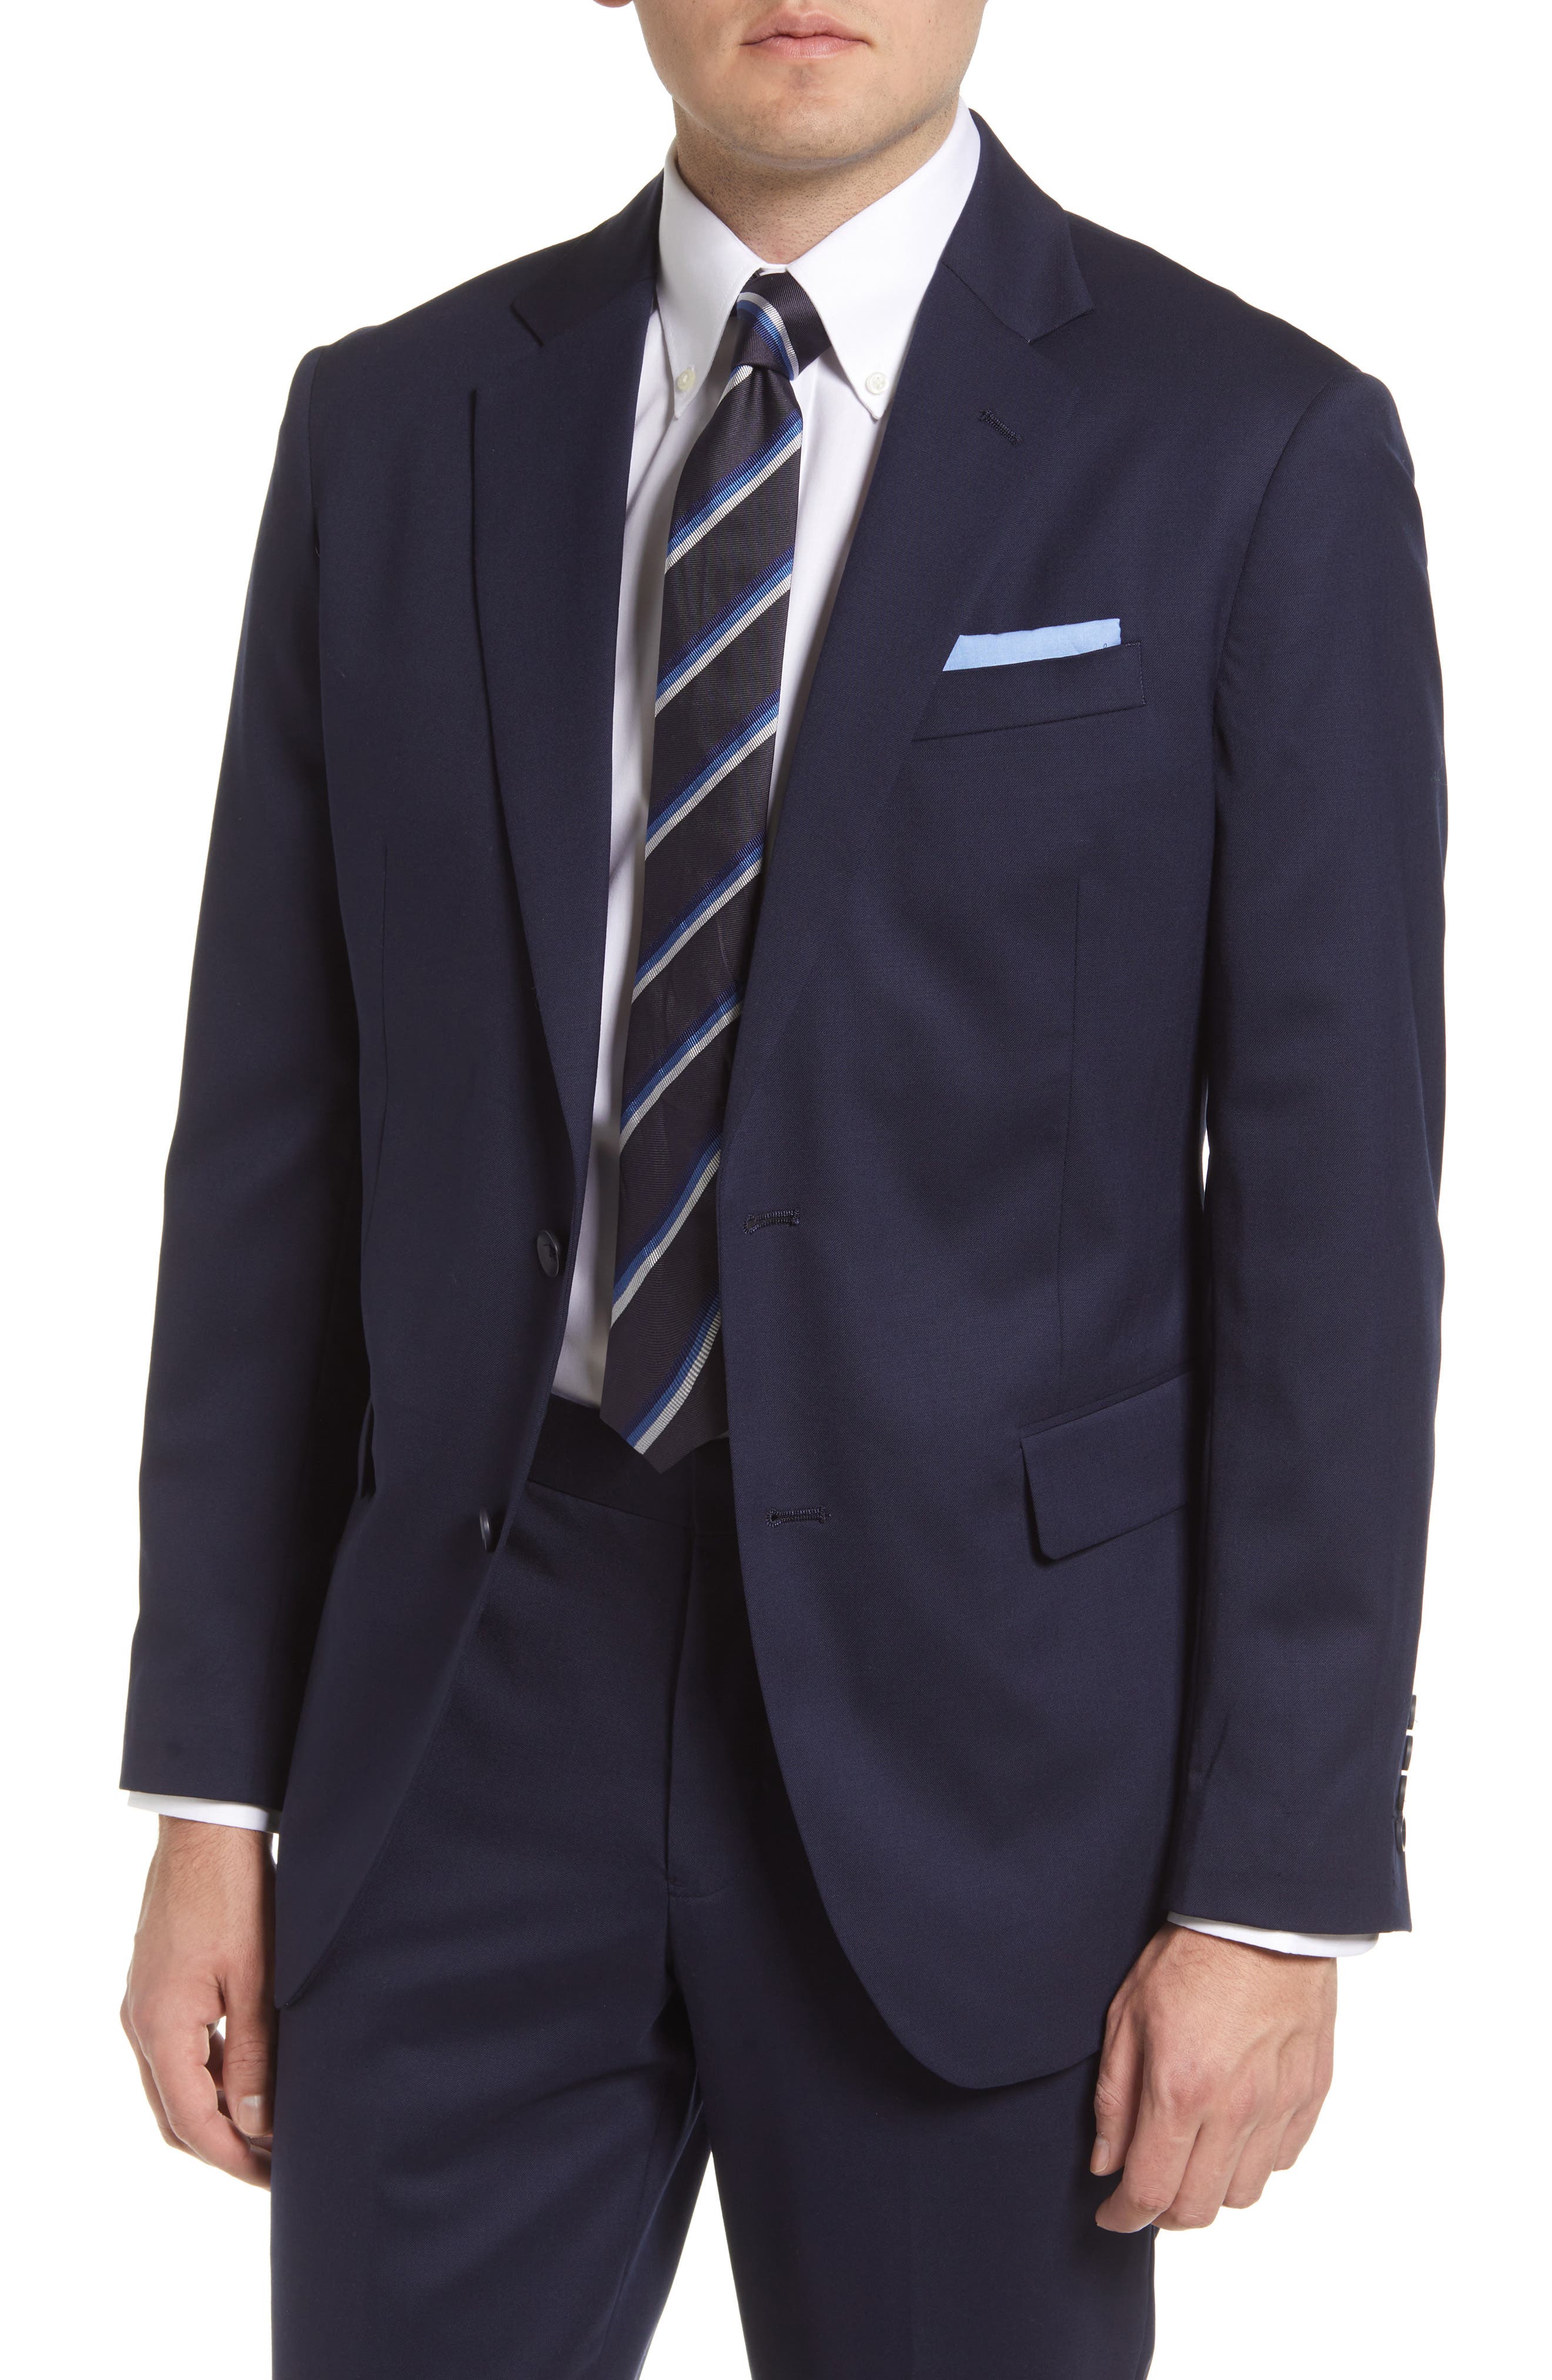 Hugo Boss Set KIDS FASHION Suits & Sets Print discount 65% Gray/Blue 4Y 